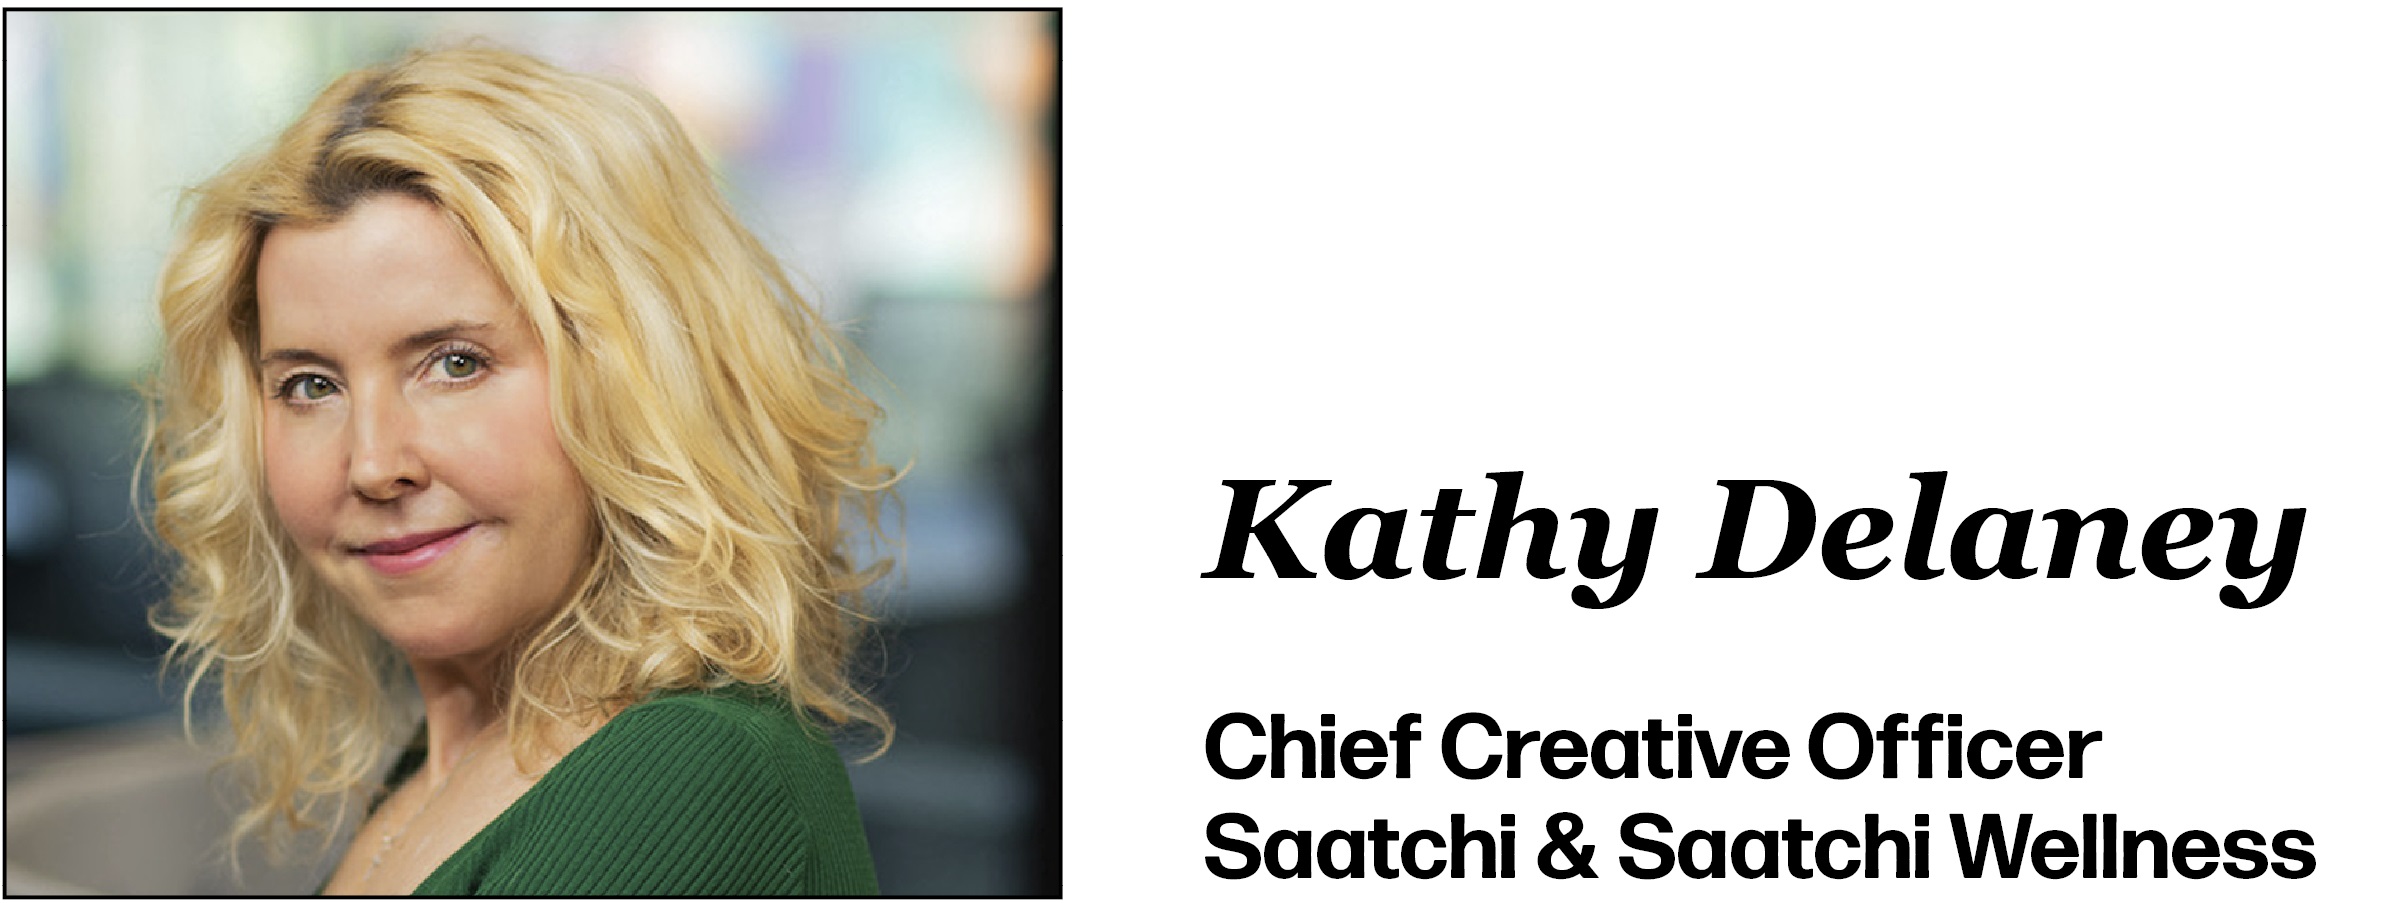 Kathy Delaney Chief Creative Officer Saatchi & Saatchi Wellness